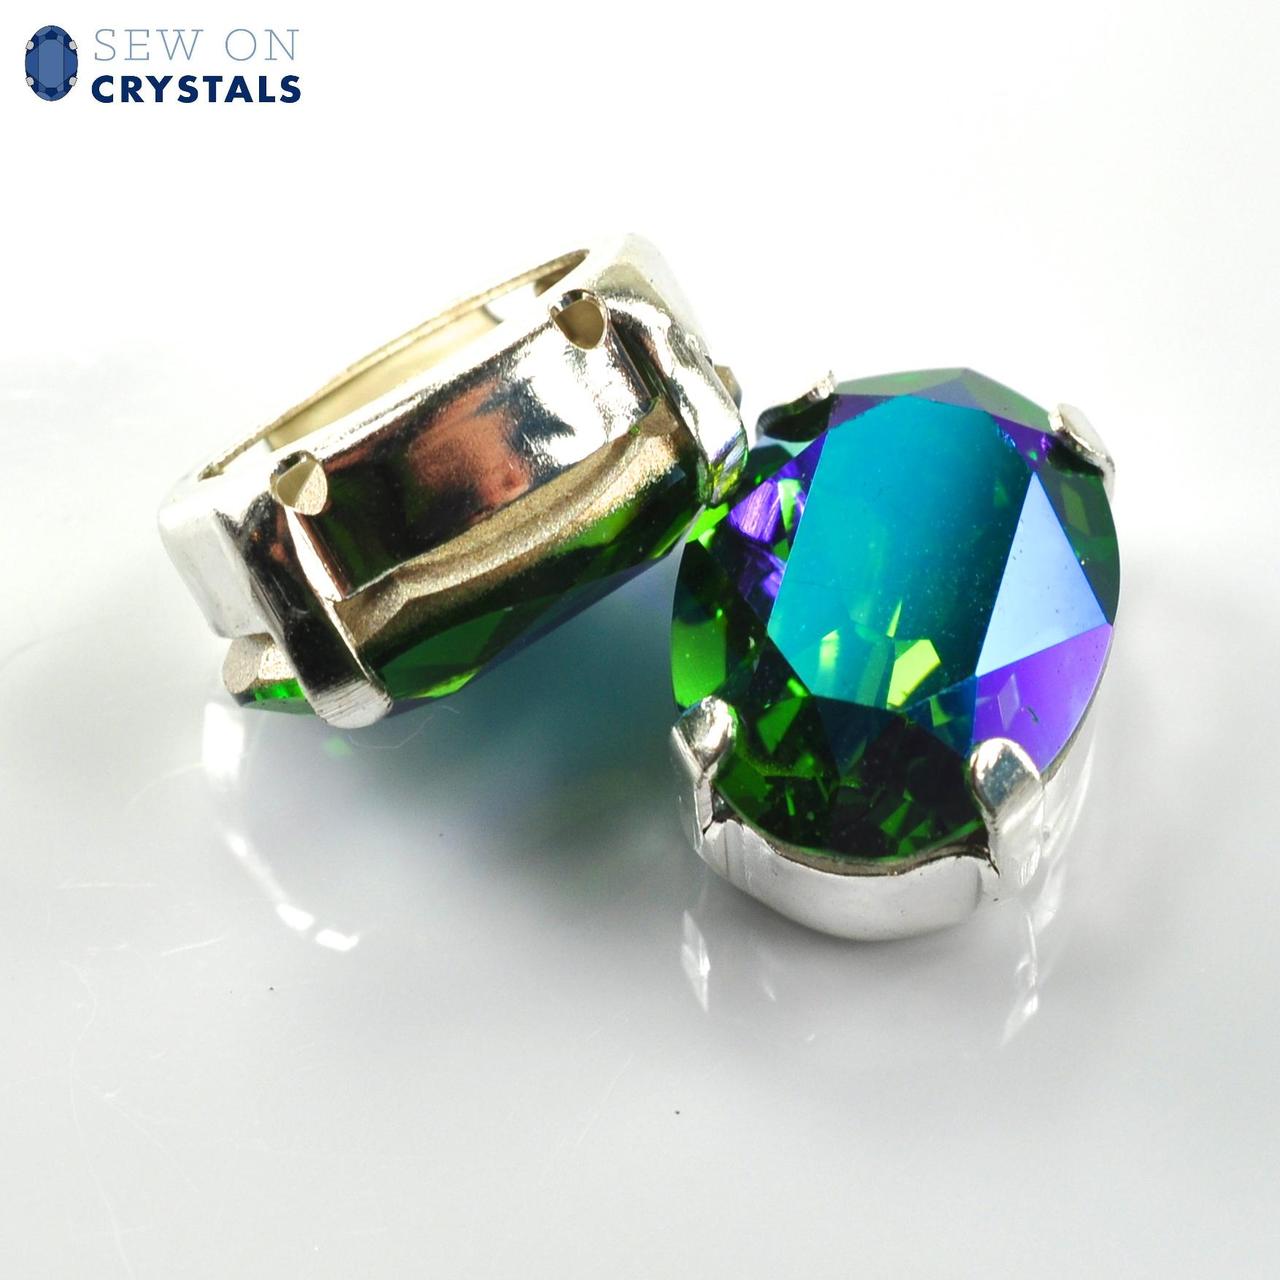 Fern Green Glacier Blue 14x10mm Oval Sew On Crystals - 2 Pieces